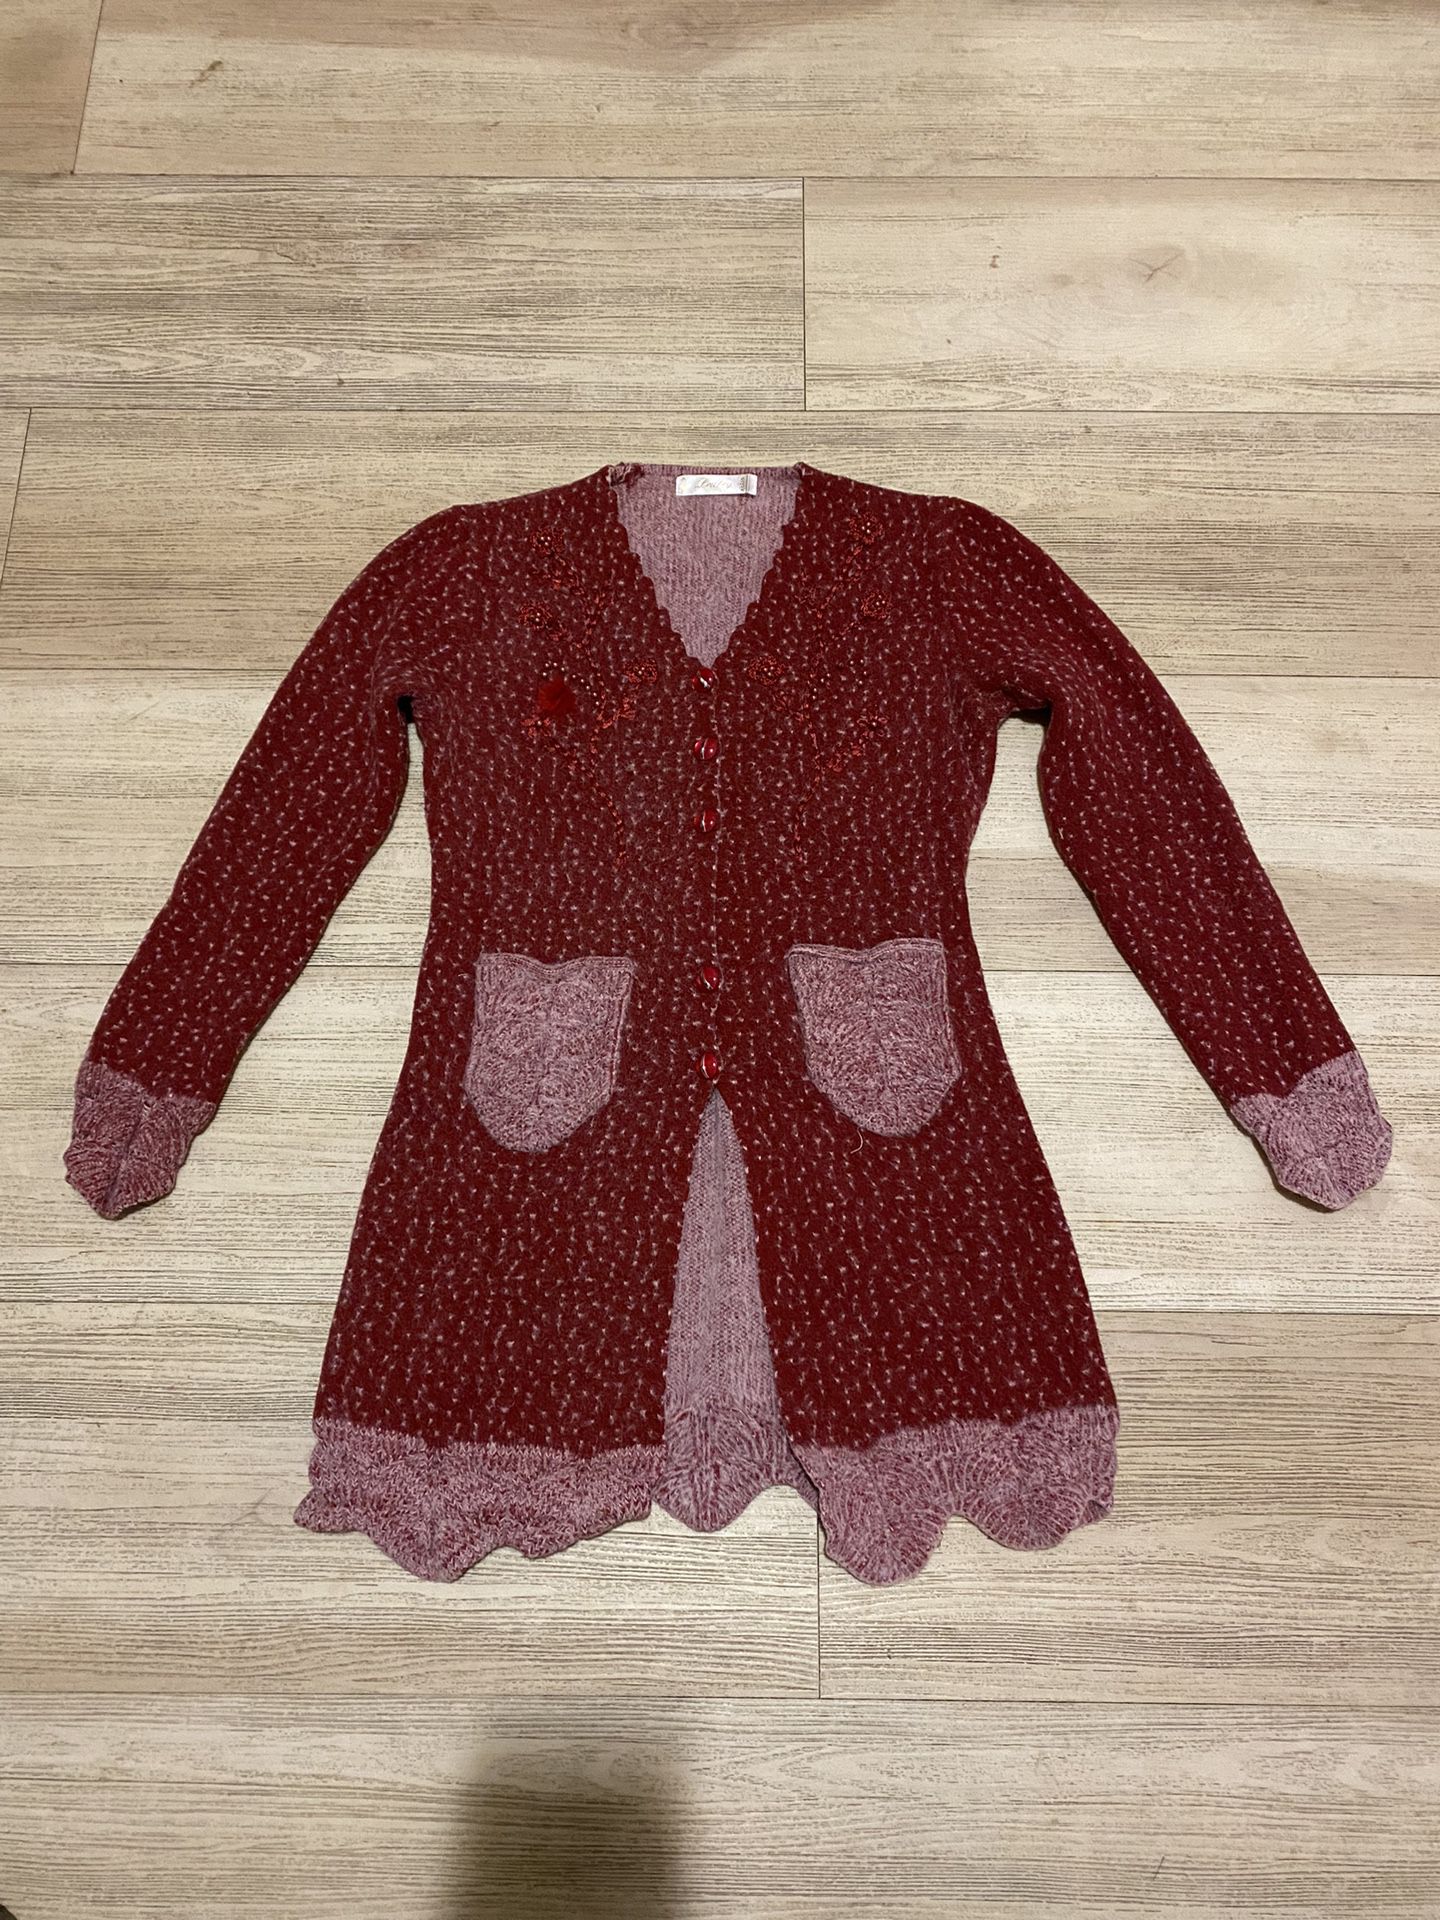 Vintage “Ledley” Cardigan Embroidered Long Sweater. 